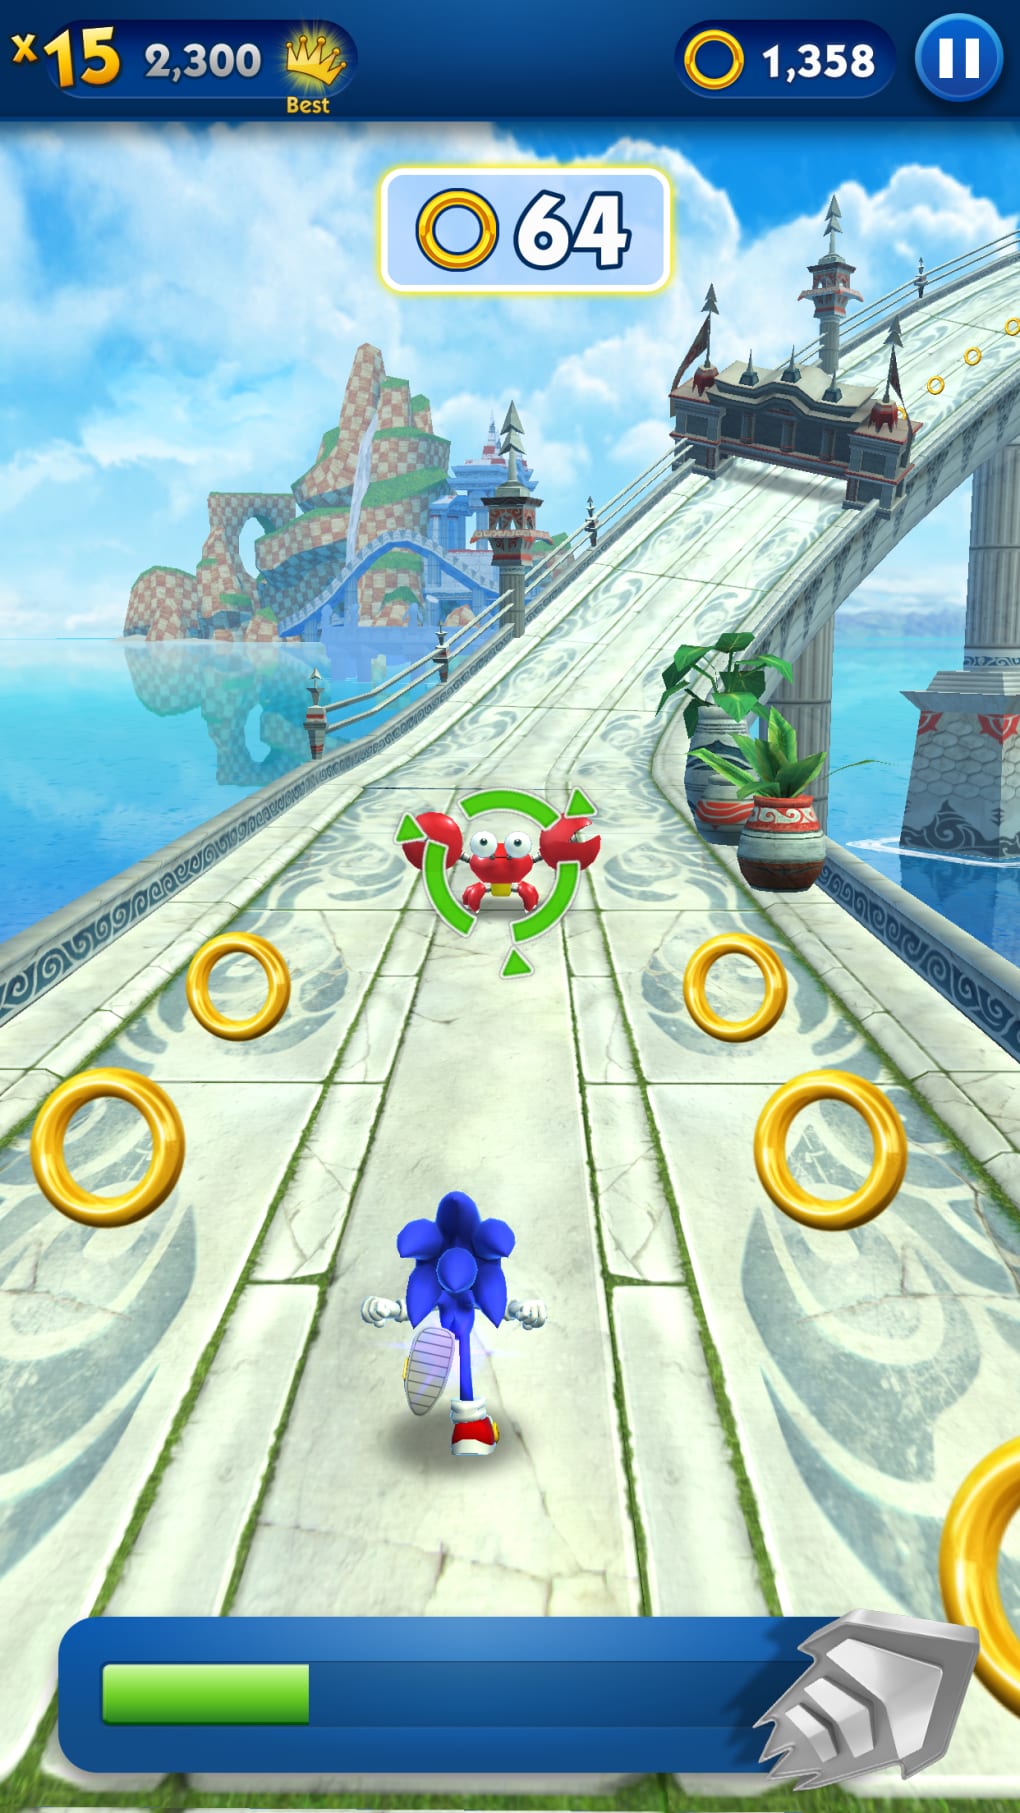 Sonic Dash Endless Runner Game by SEGA